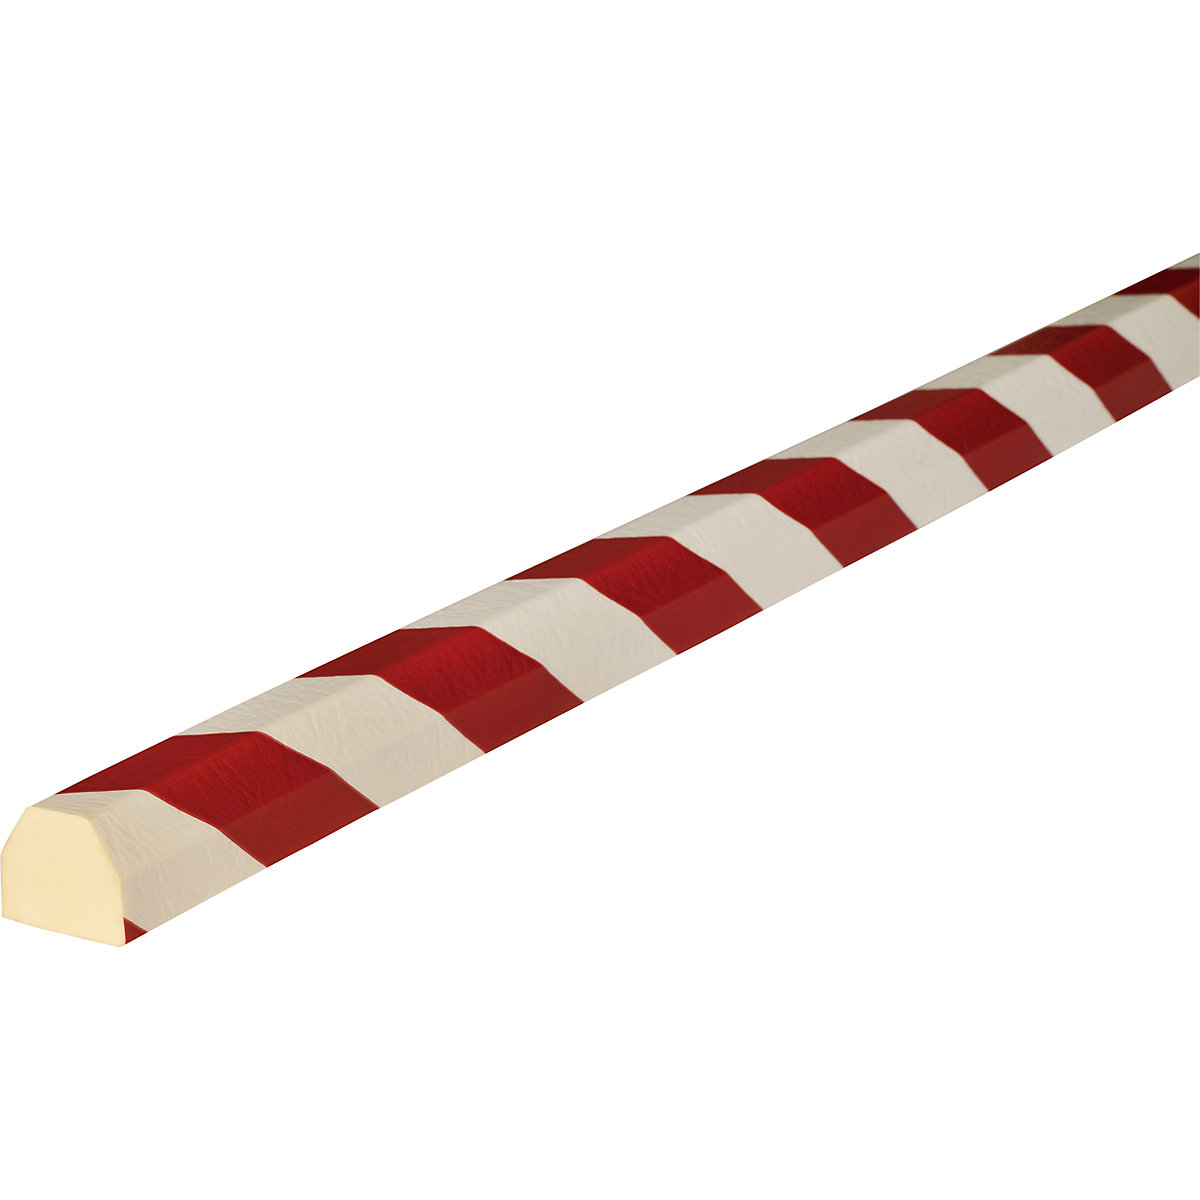 Knuffi®-oppervlaktebescherming – SHG, type CC, stuk van 1 m, rood/wit-20